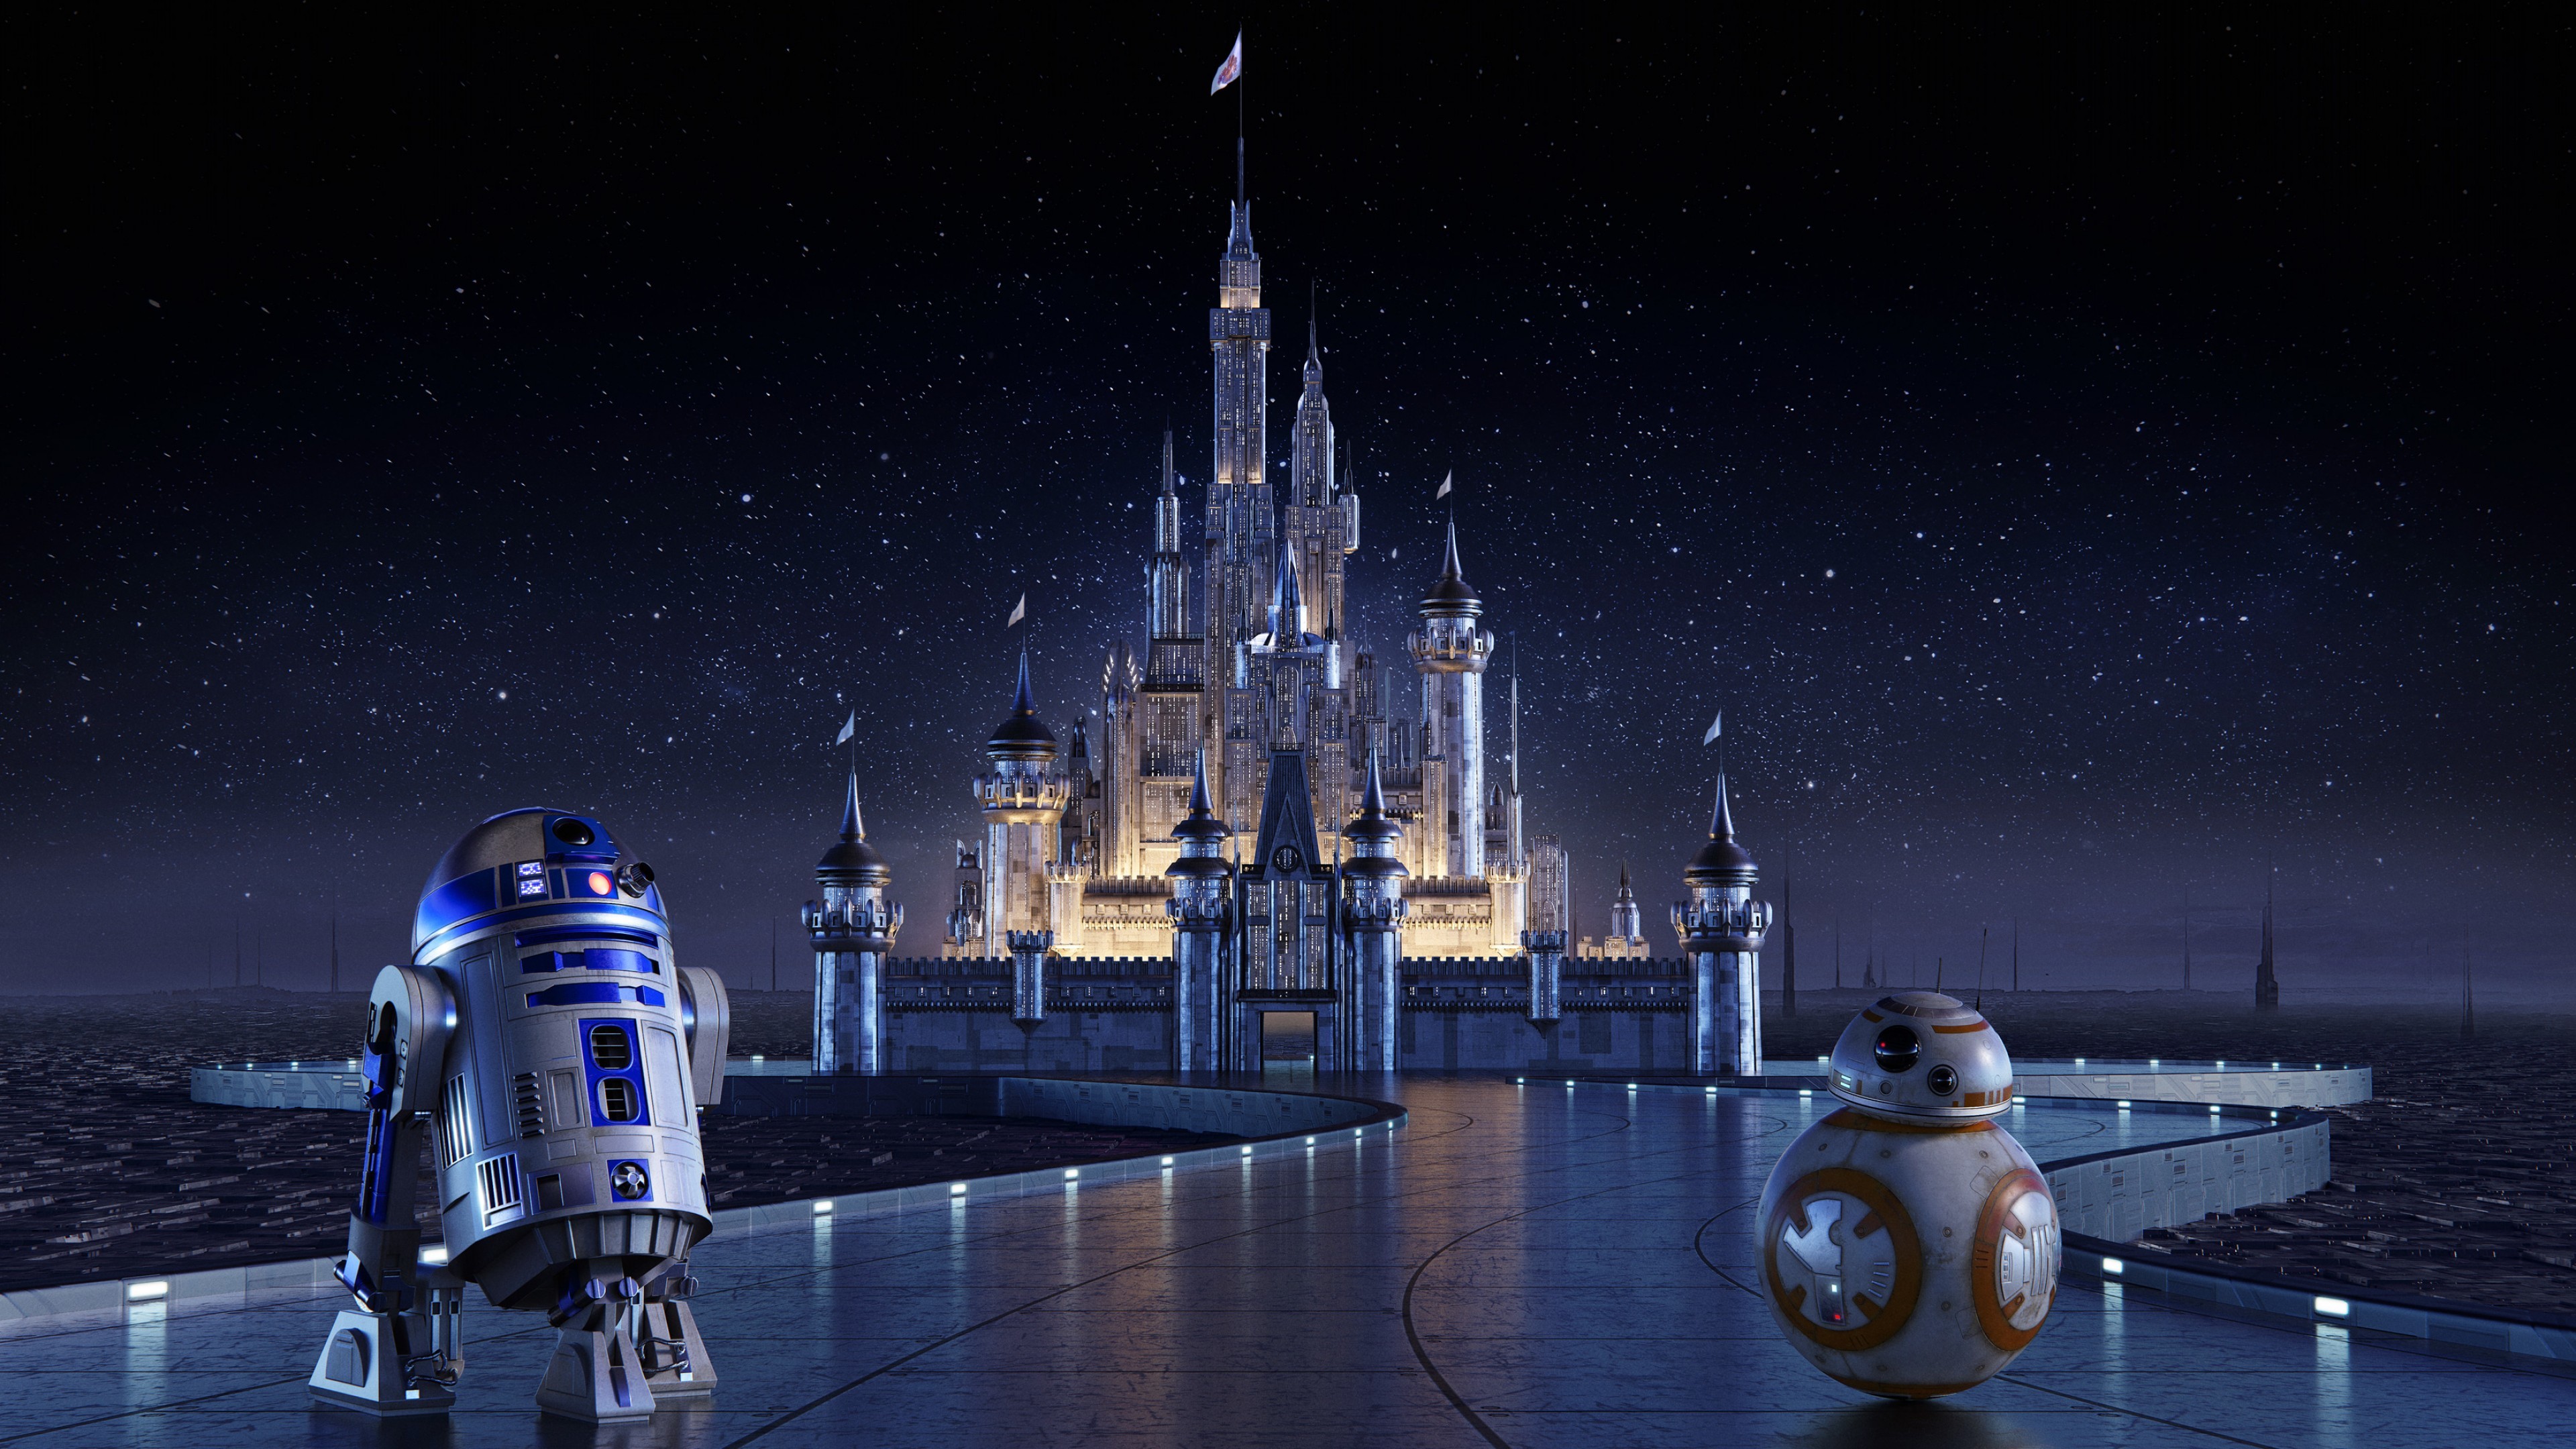 3840x2160, Disney Castle, R2 D2, Bb 8, Star Wars, Cinderella - 4k Disney Castle - HD Wallpaper 